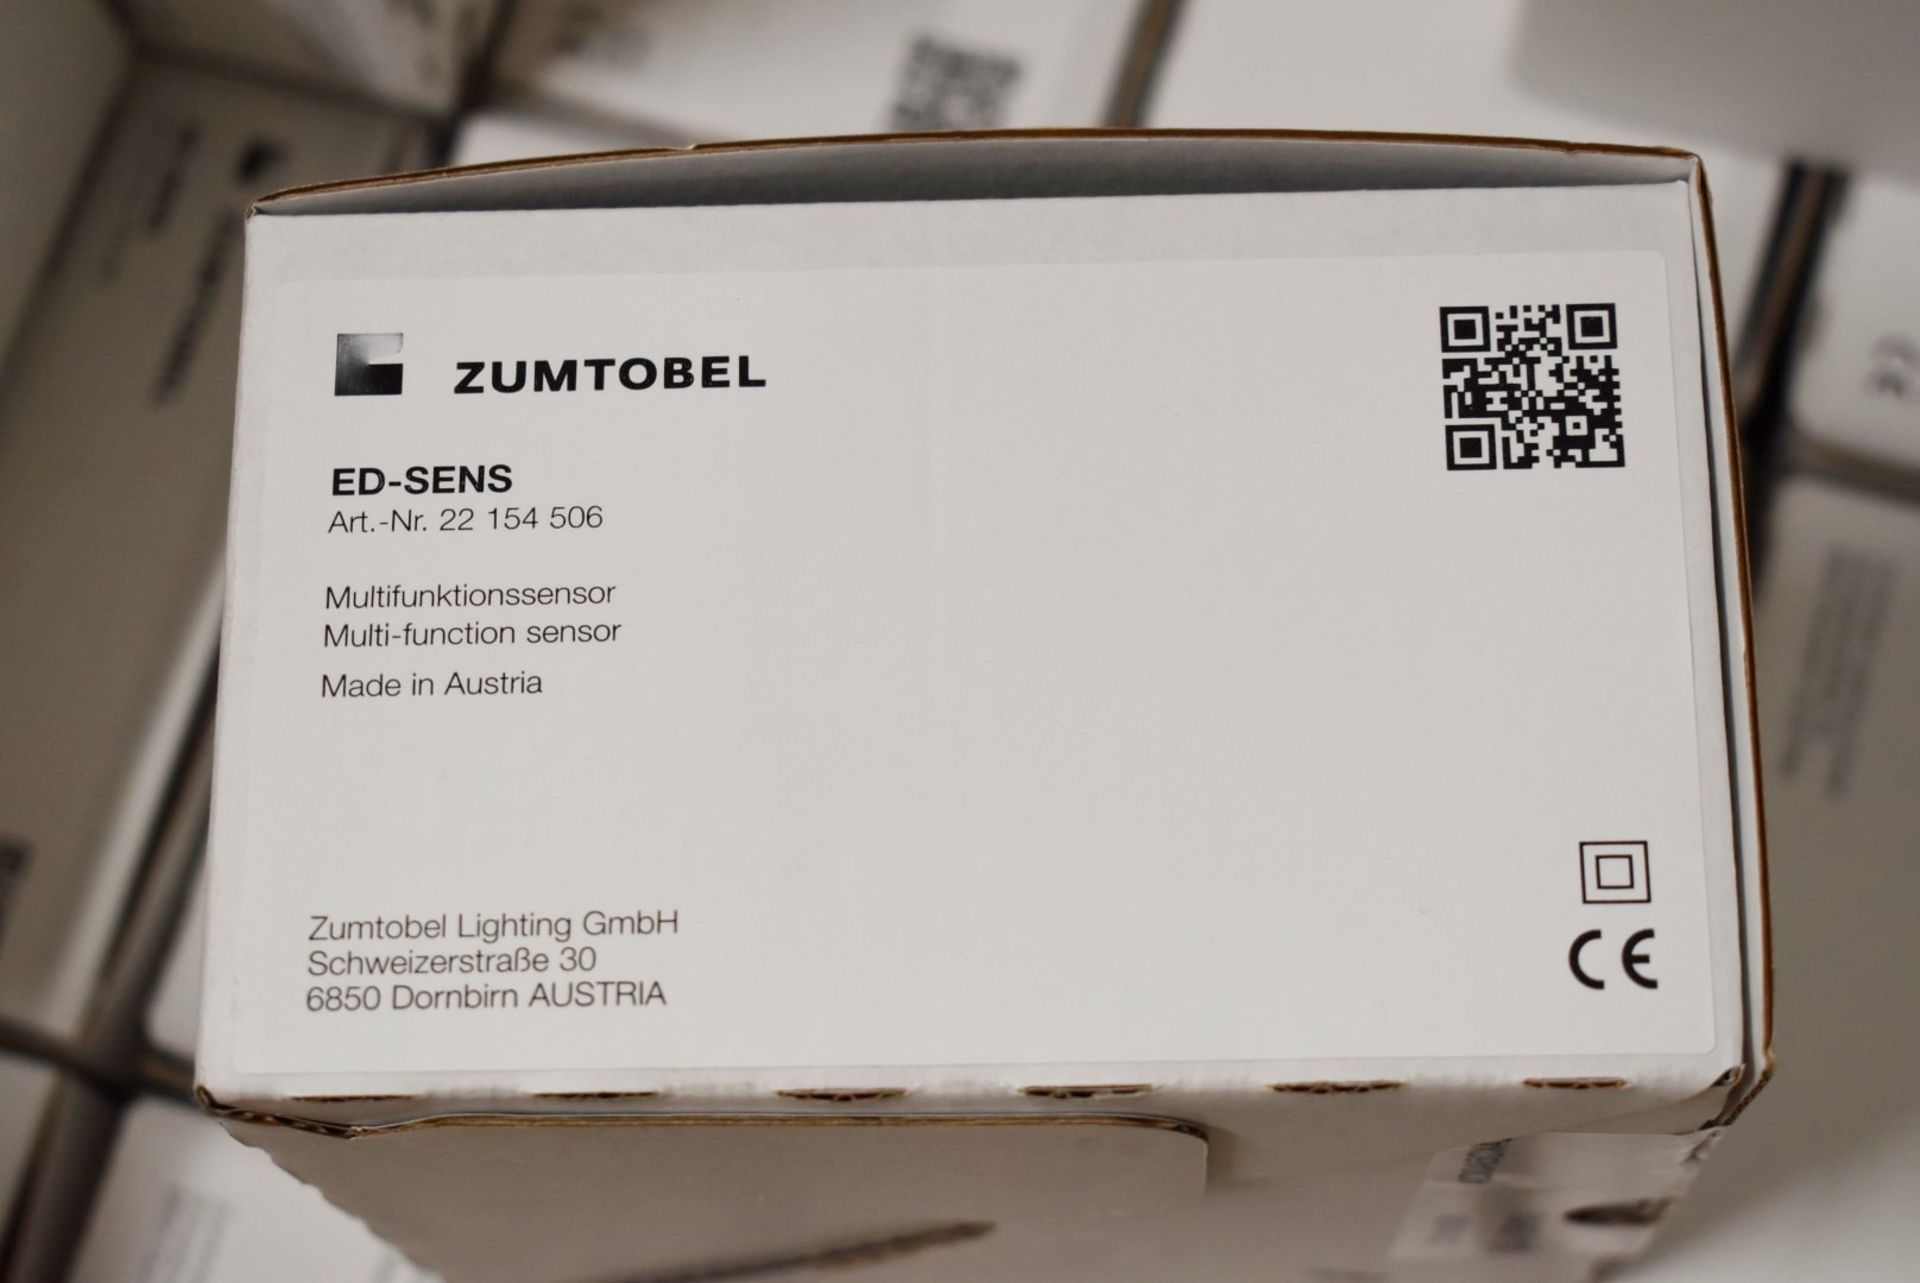 10 x Zumtobel ED-SENS Movement Multisensors - Product Code: 22154506 - New Boxed Stock - RRP £900 - Image 3 of 5